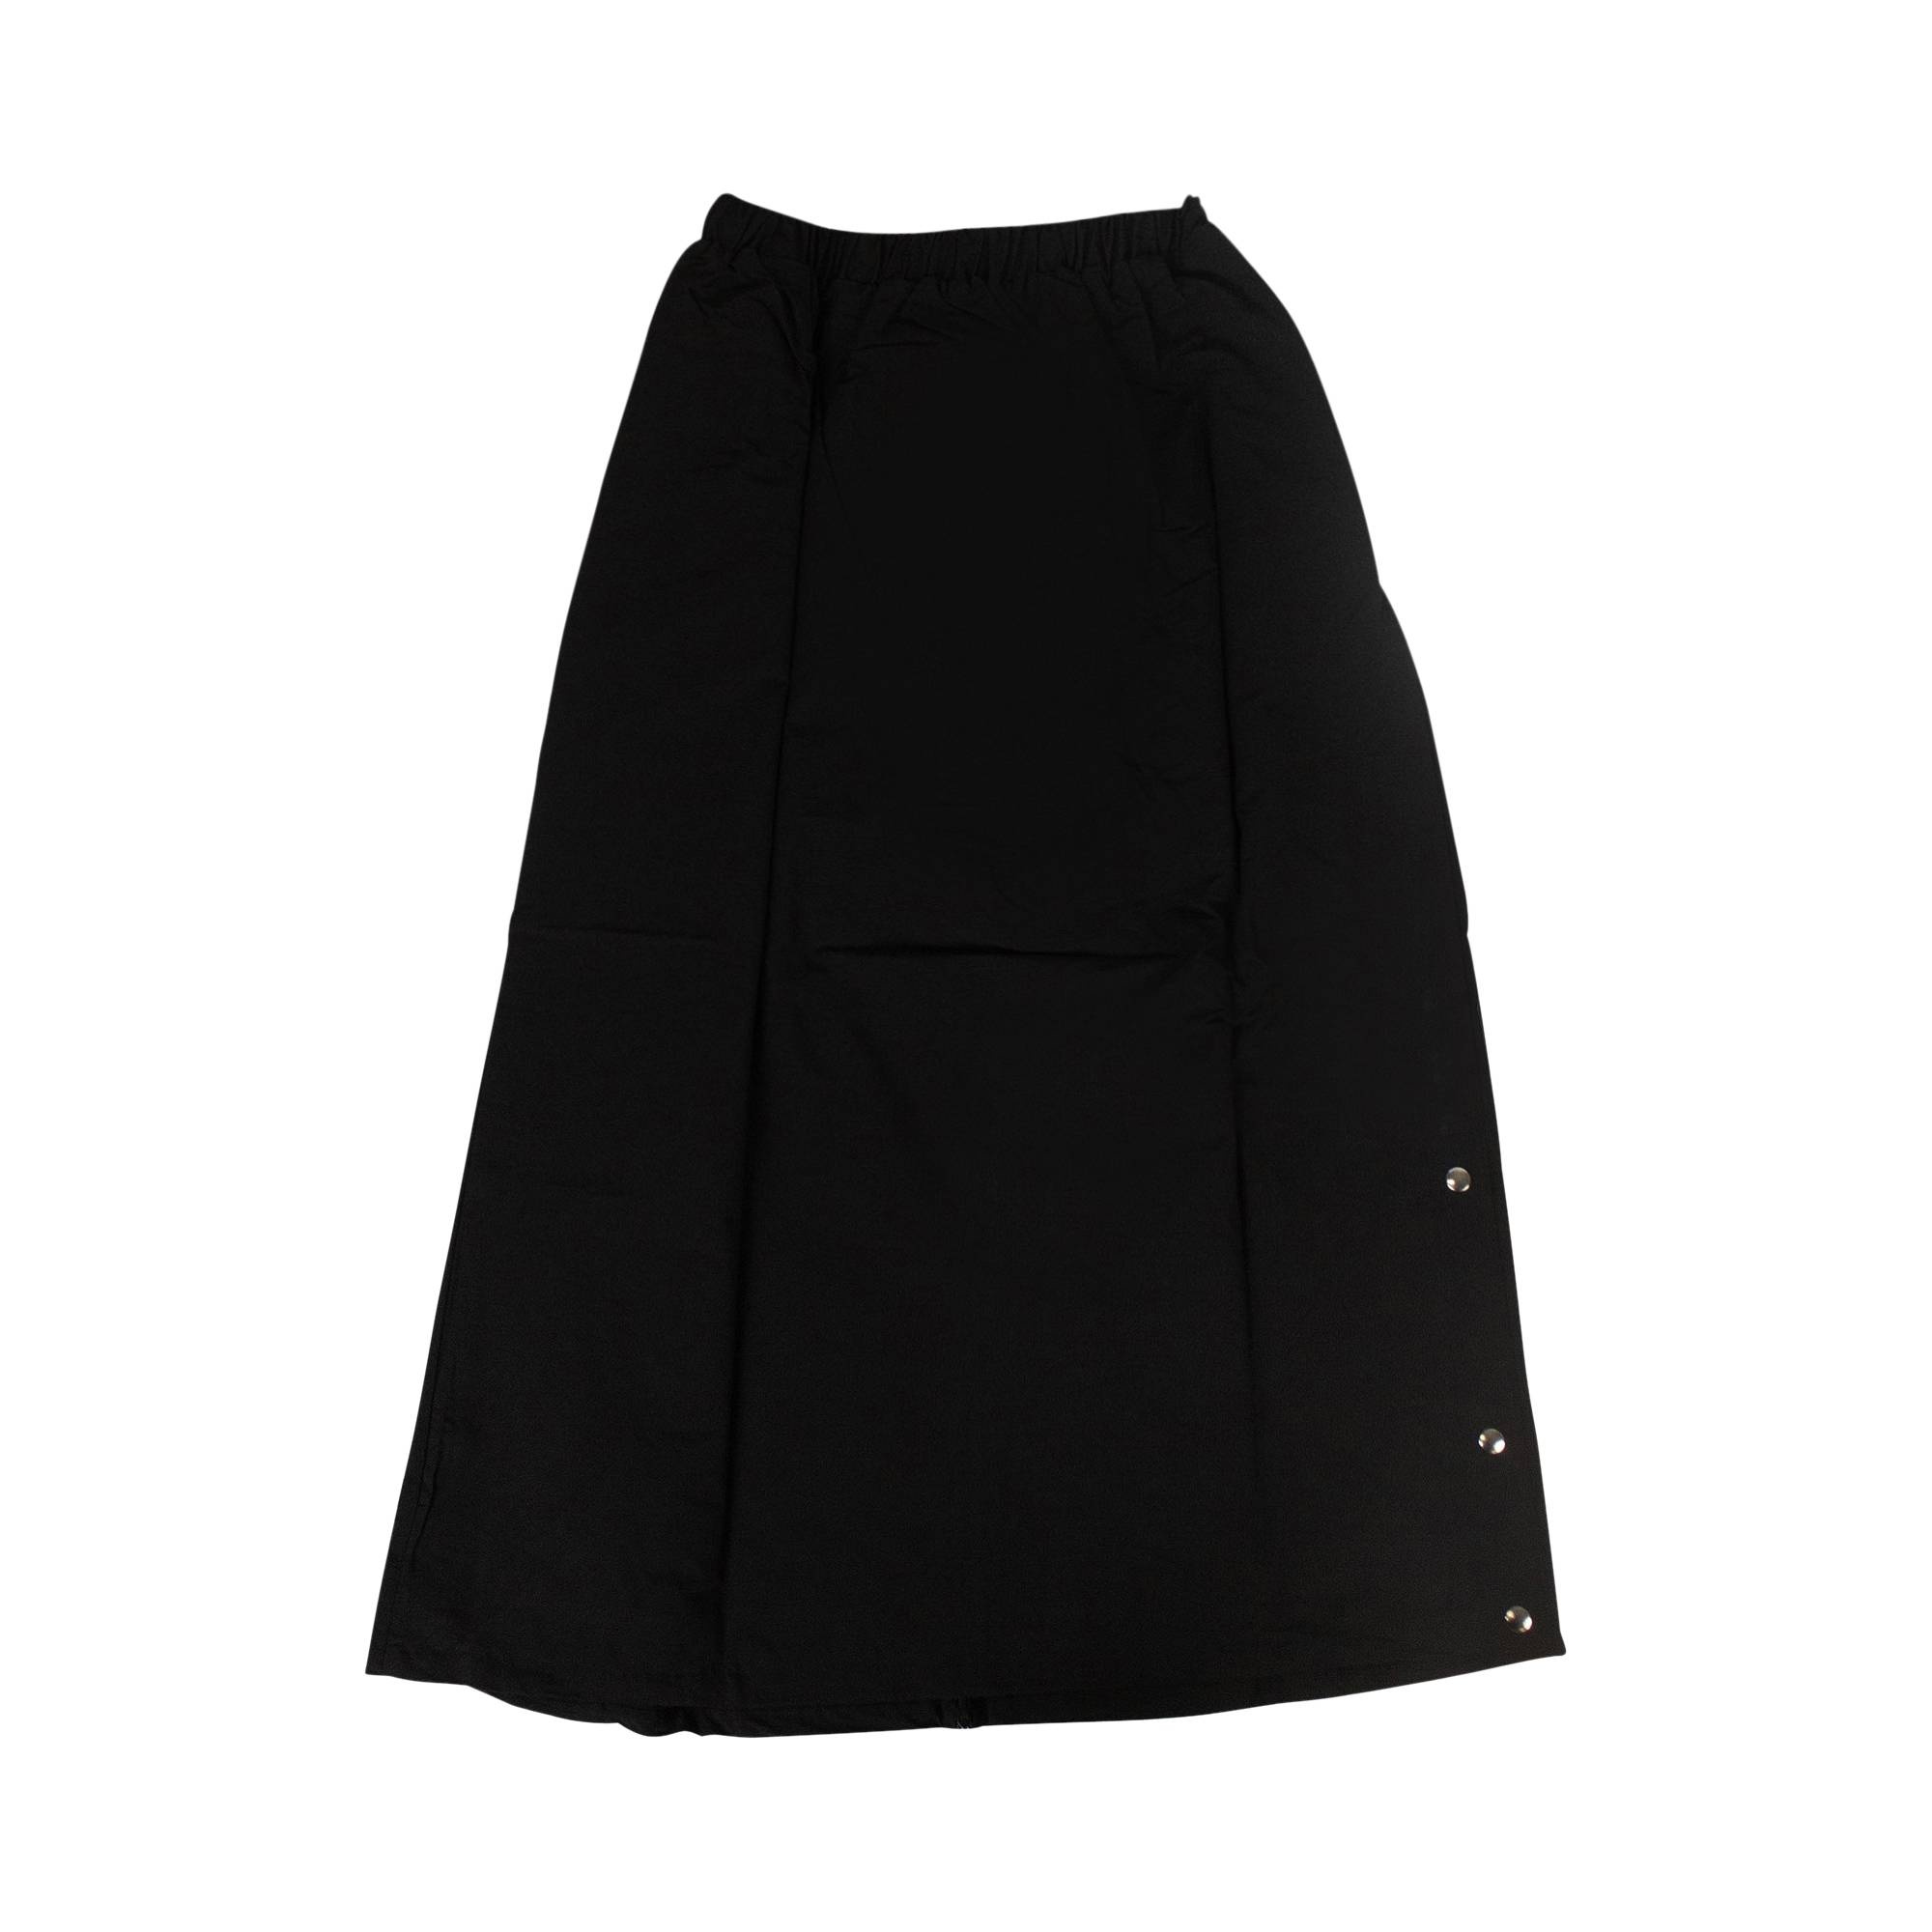 A-Cold-Wall* Snap Midi Skirt 'Black' - 2